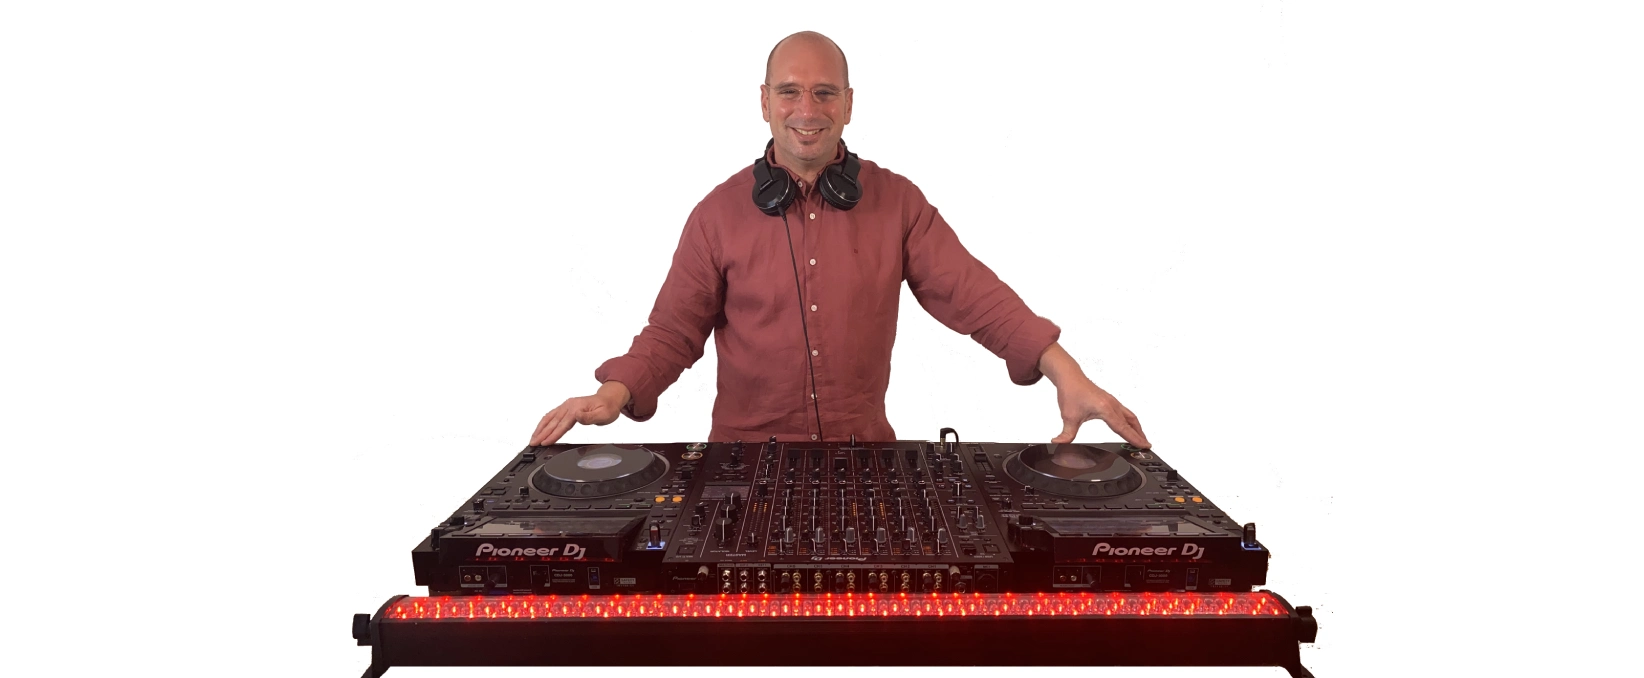 Party DJ Services